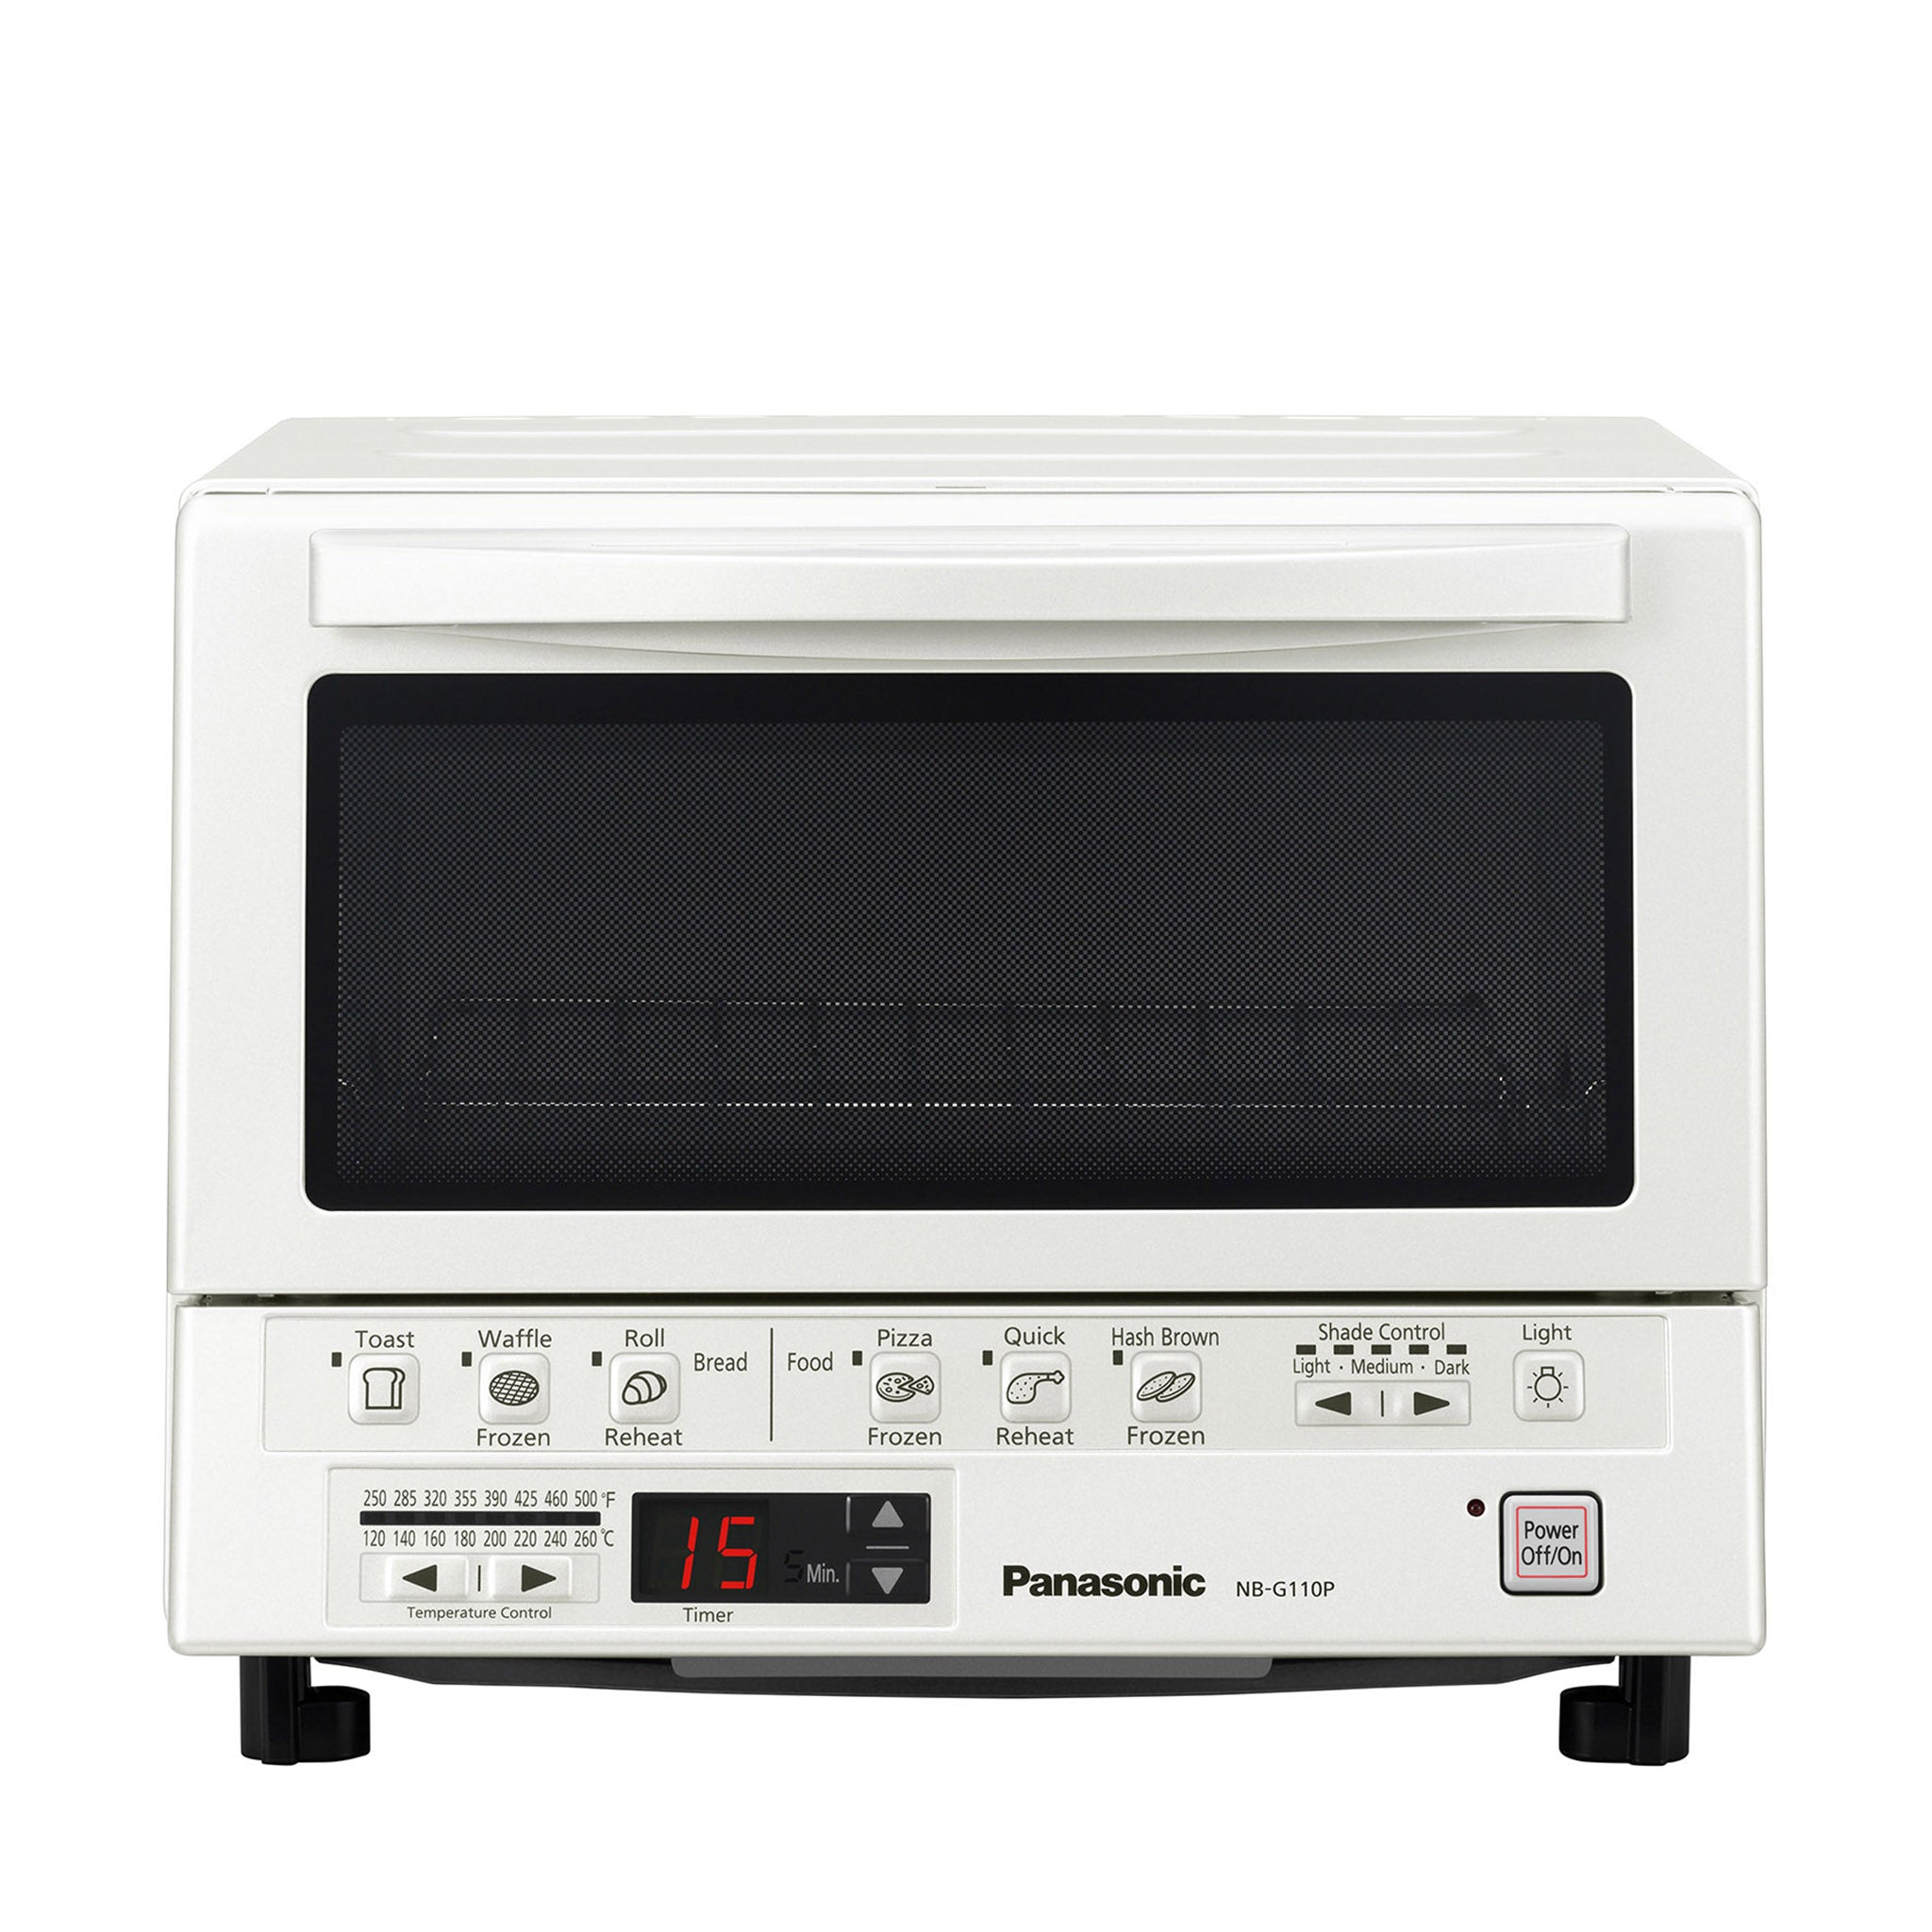 Panasonic FlashXpress NB-G110P Electric Oven - 1300 W - White